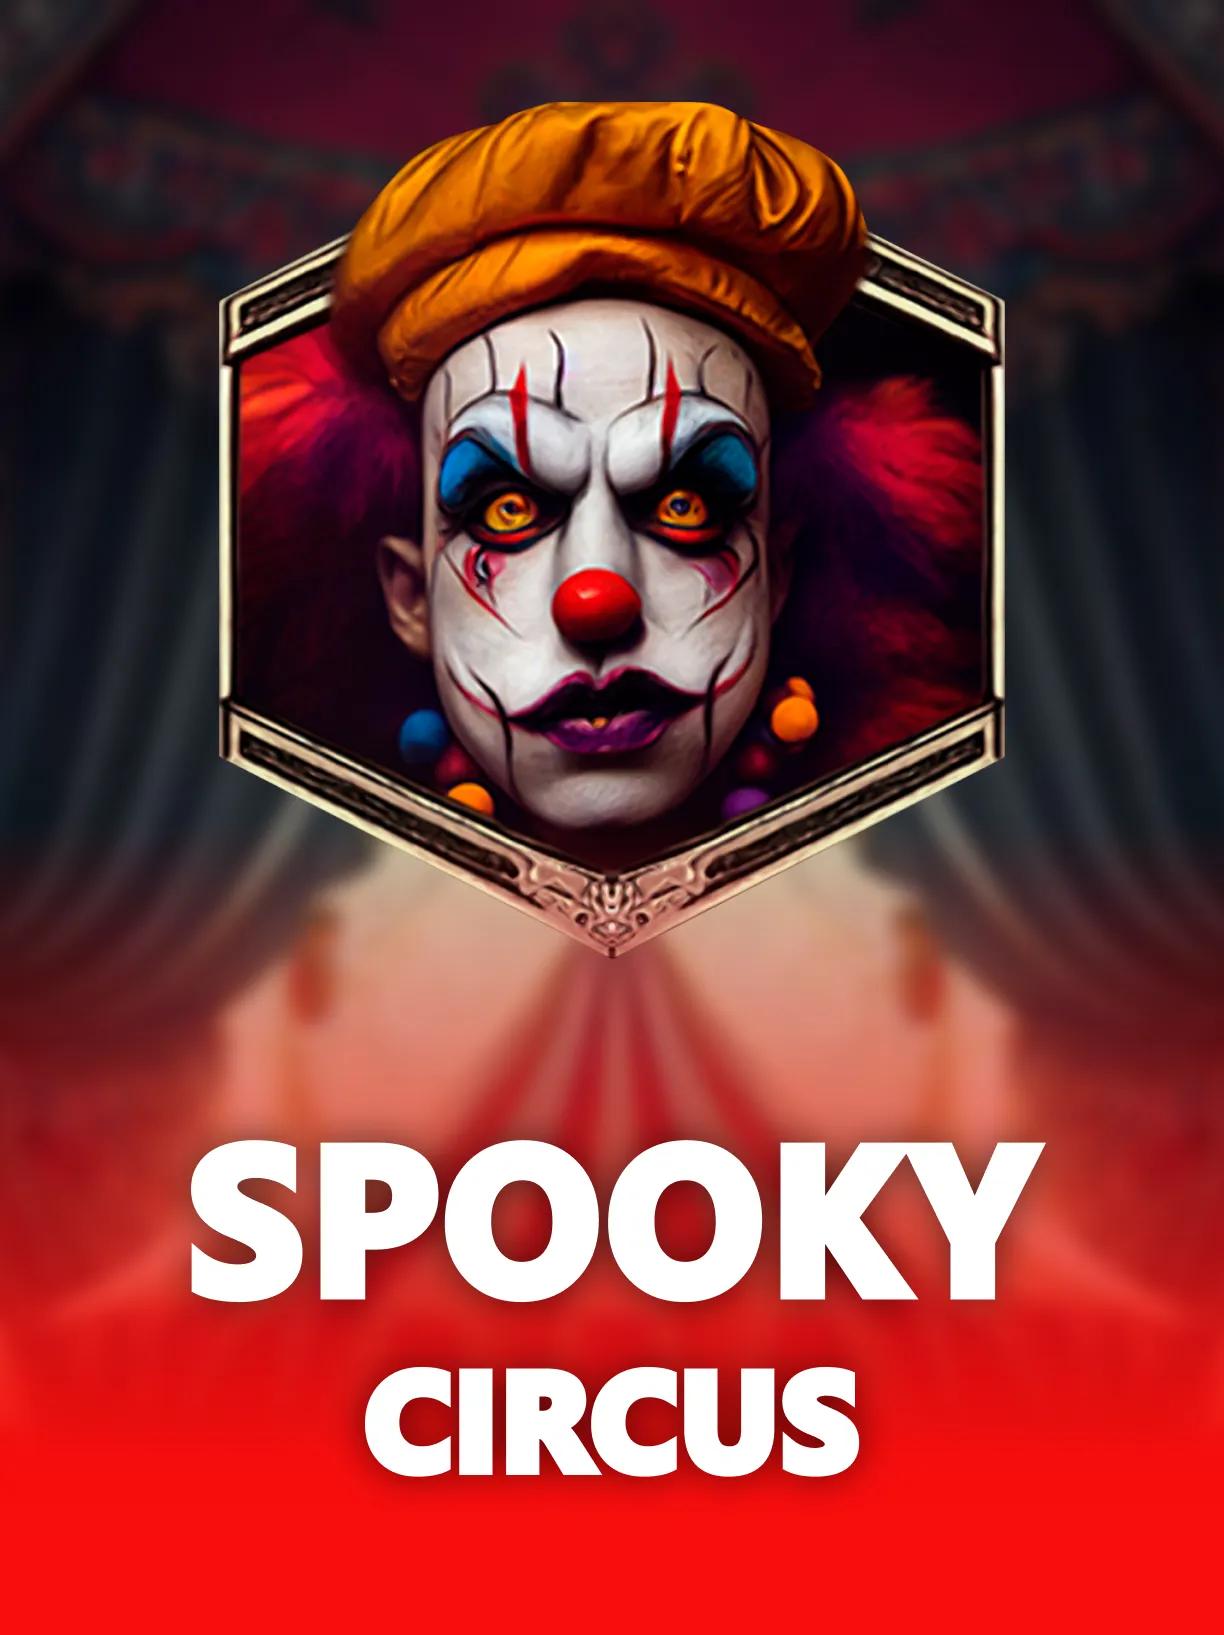 ug_Spooky_Circus_square.webp